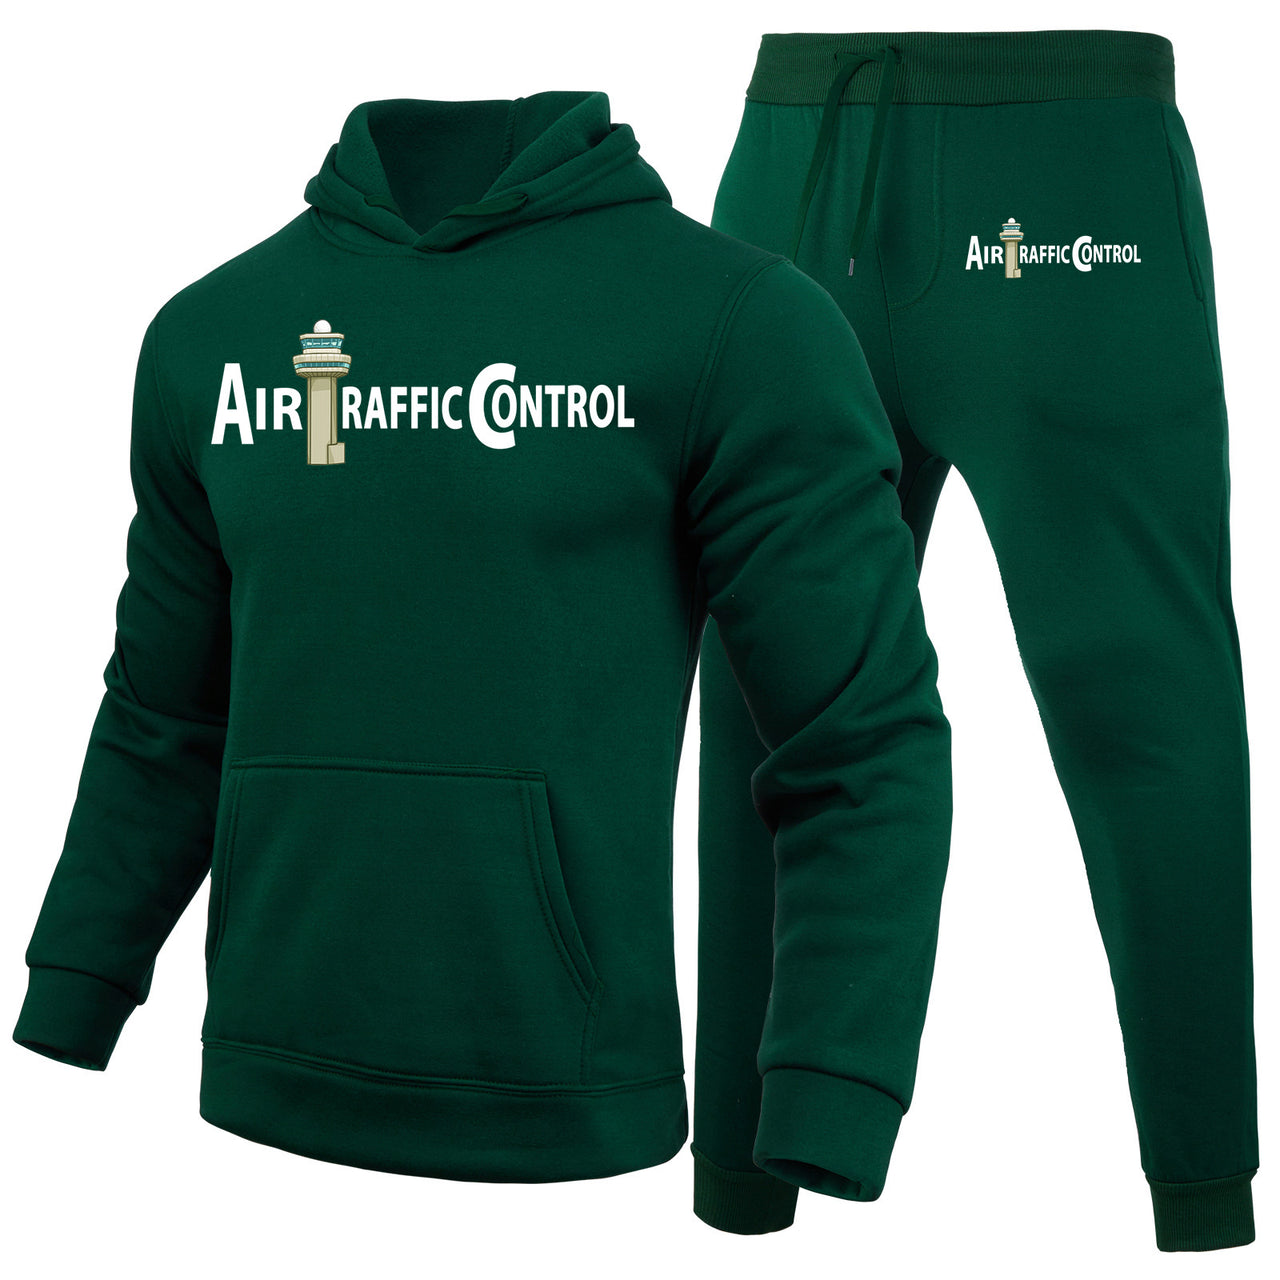 Air Traffic Control Designed Hoodies & Sweatpants Set